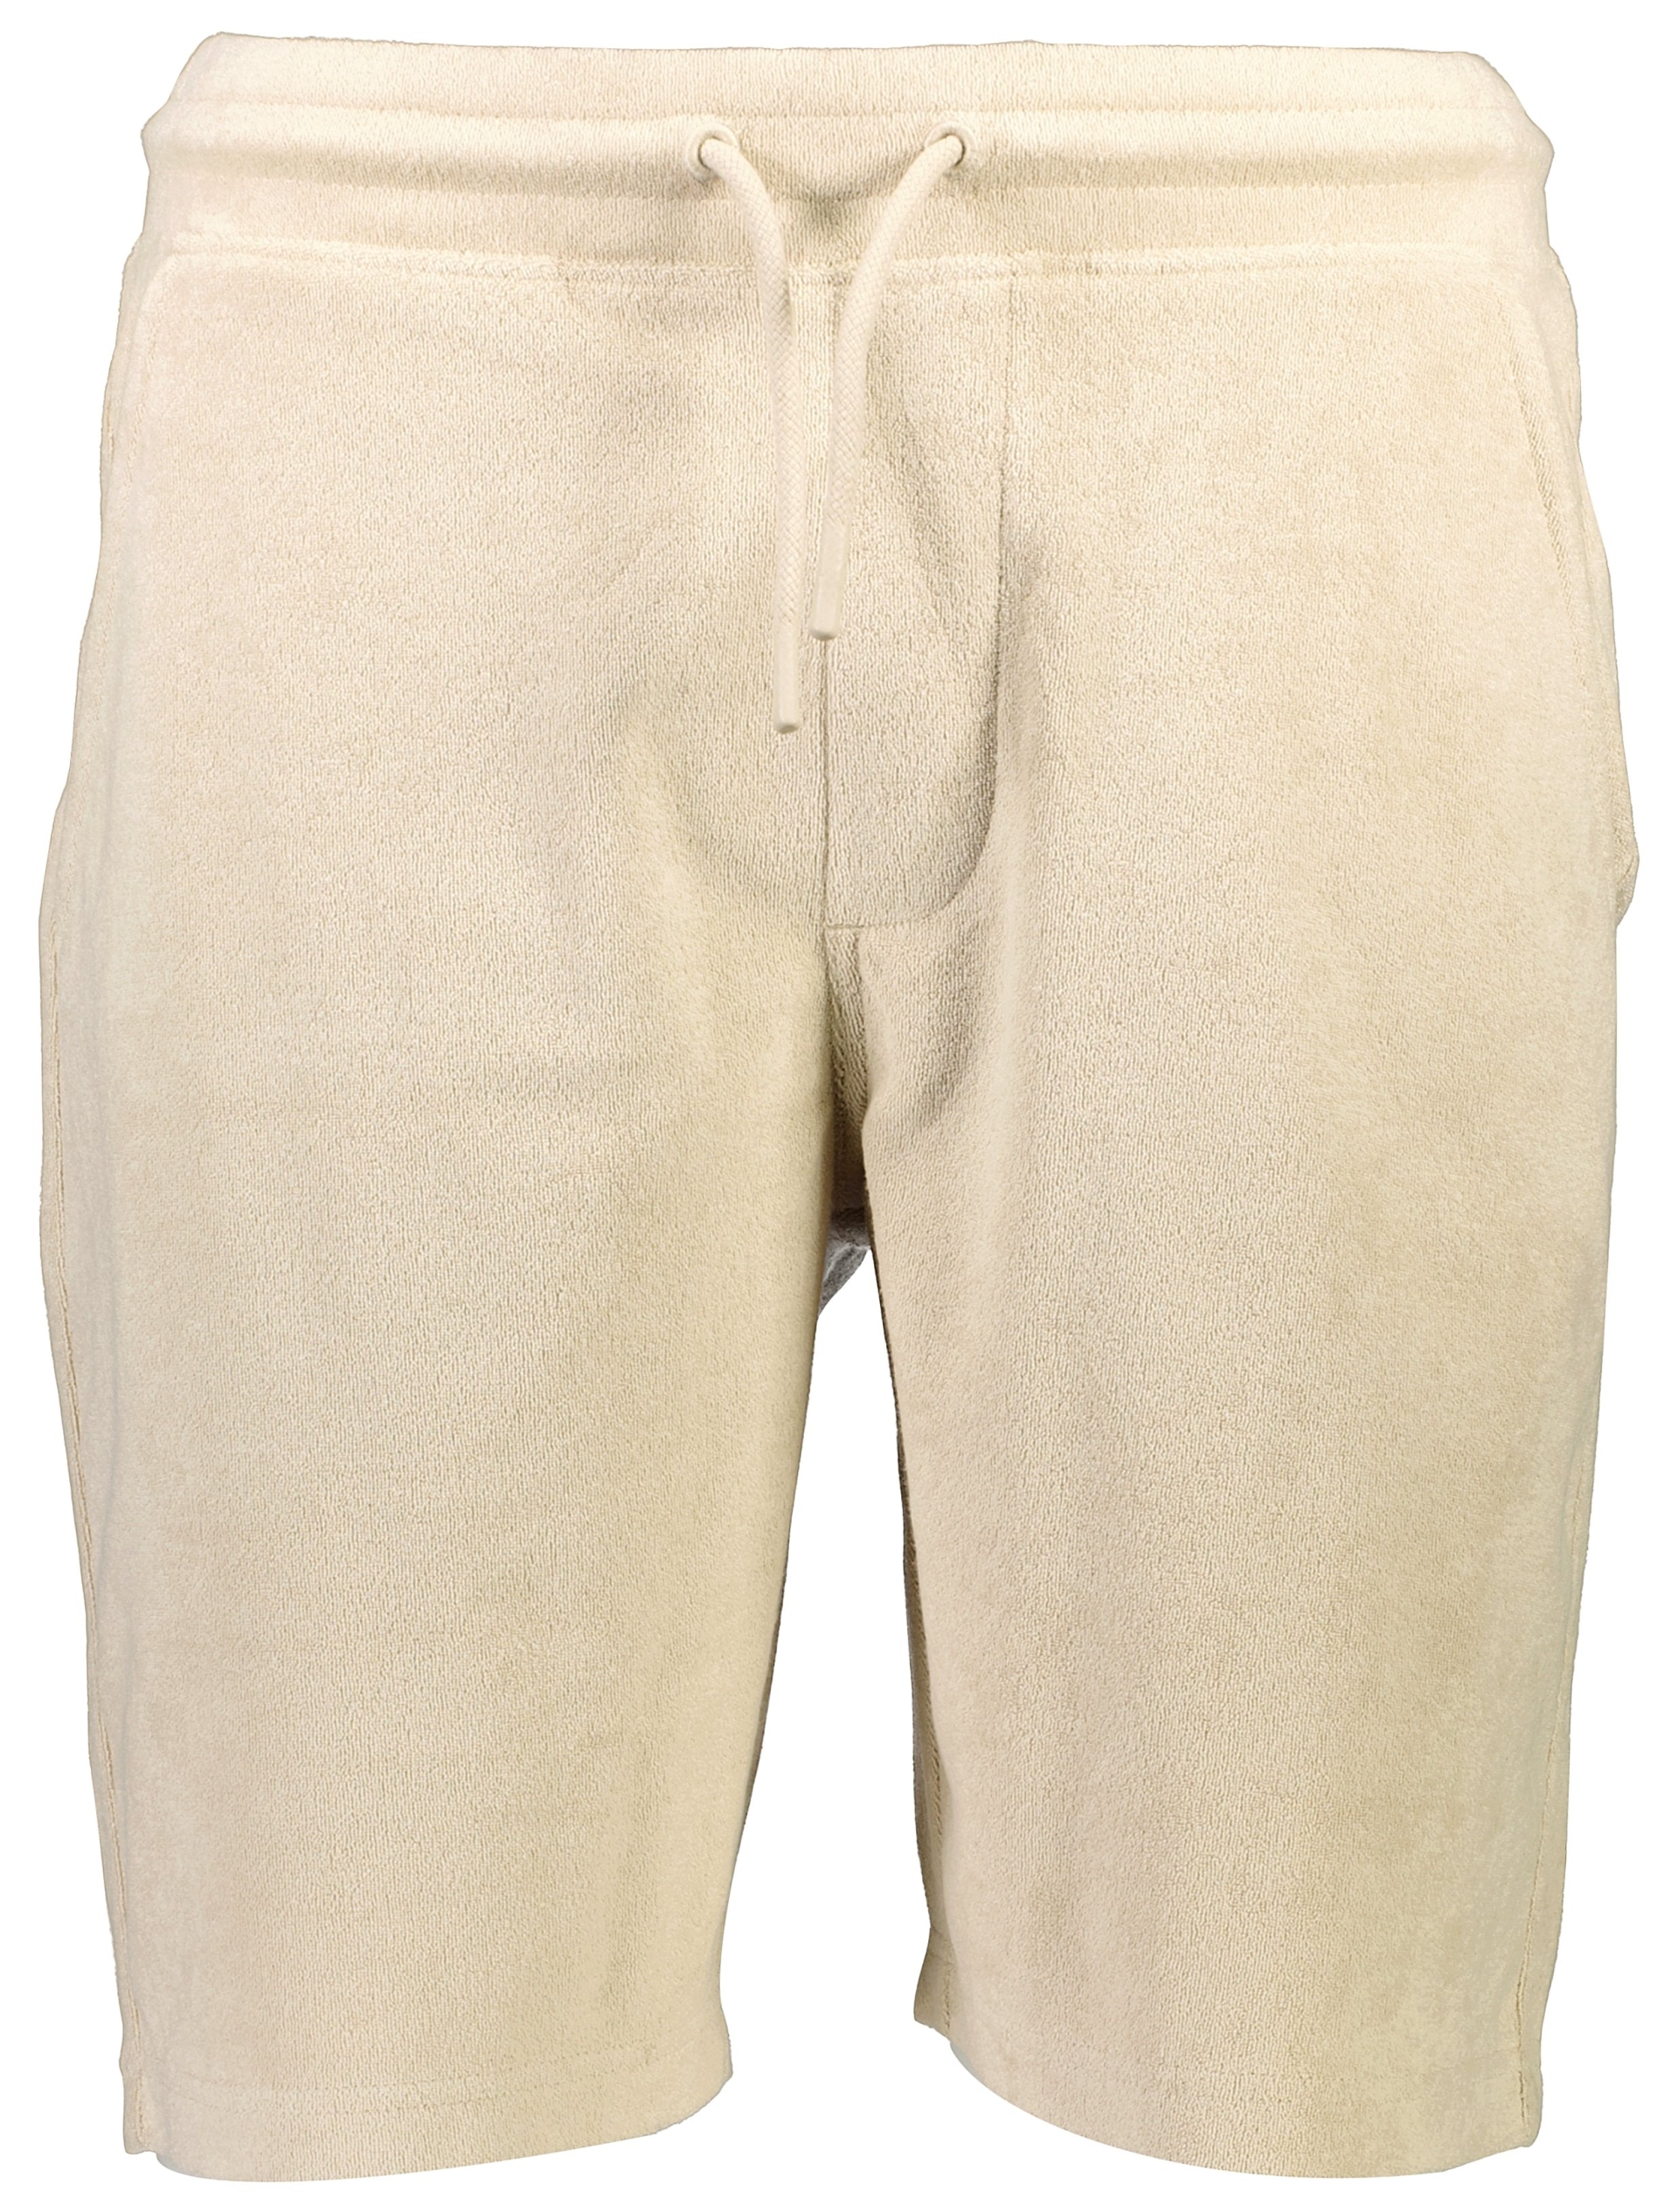 Lindbergh Casual shorts sand / stone